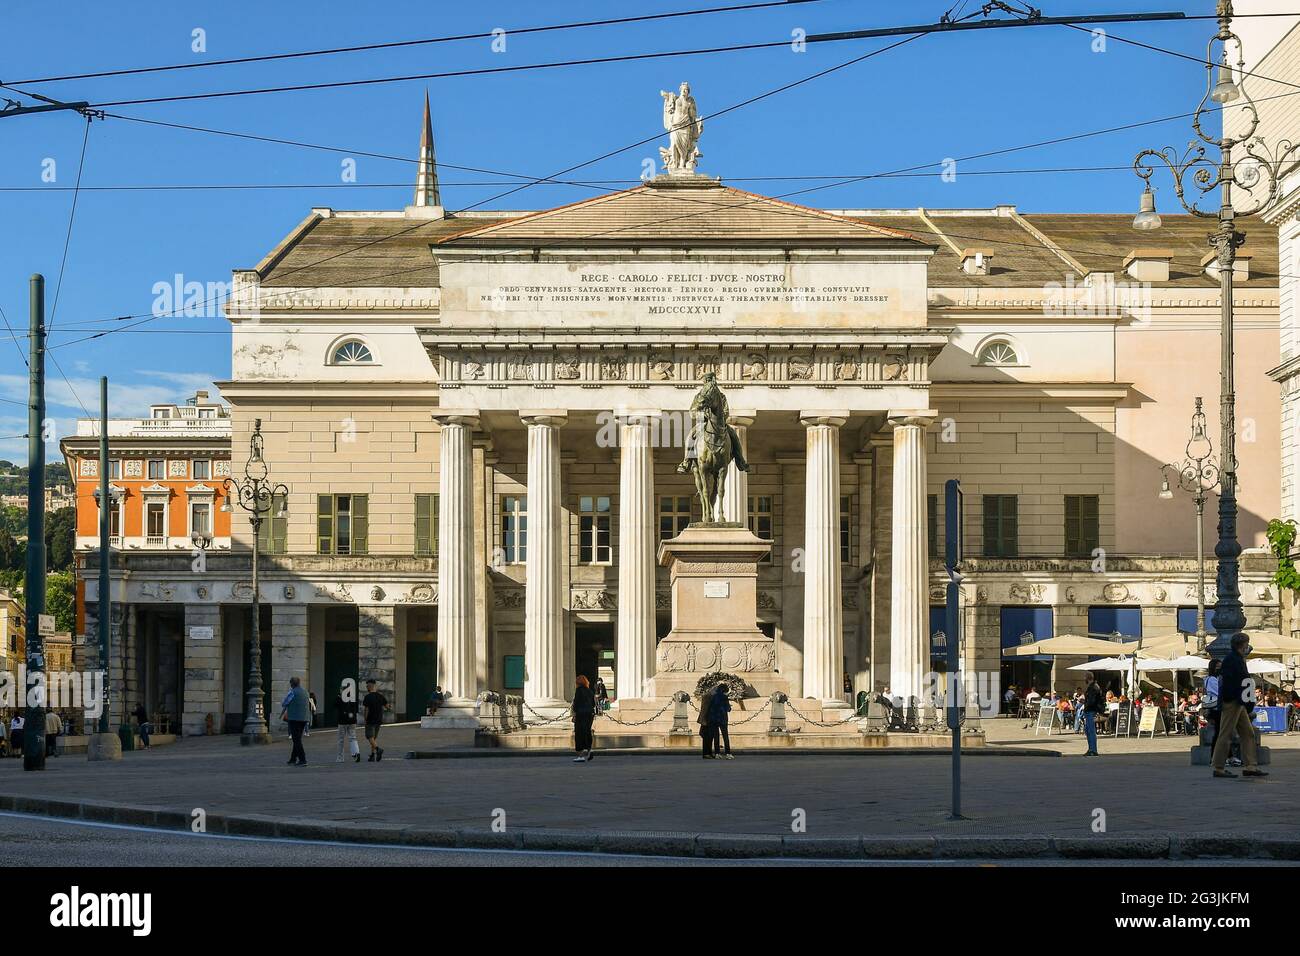 Façade of the Carlo Felice Theatre in the city center with the equestrian statue of Giuseppe Garibaldi, Genoa, Liguria, Italy Stock Photo